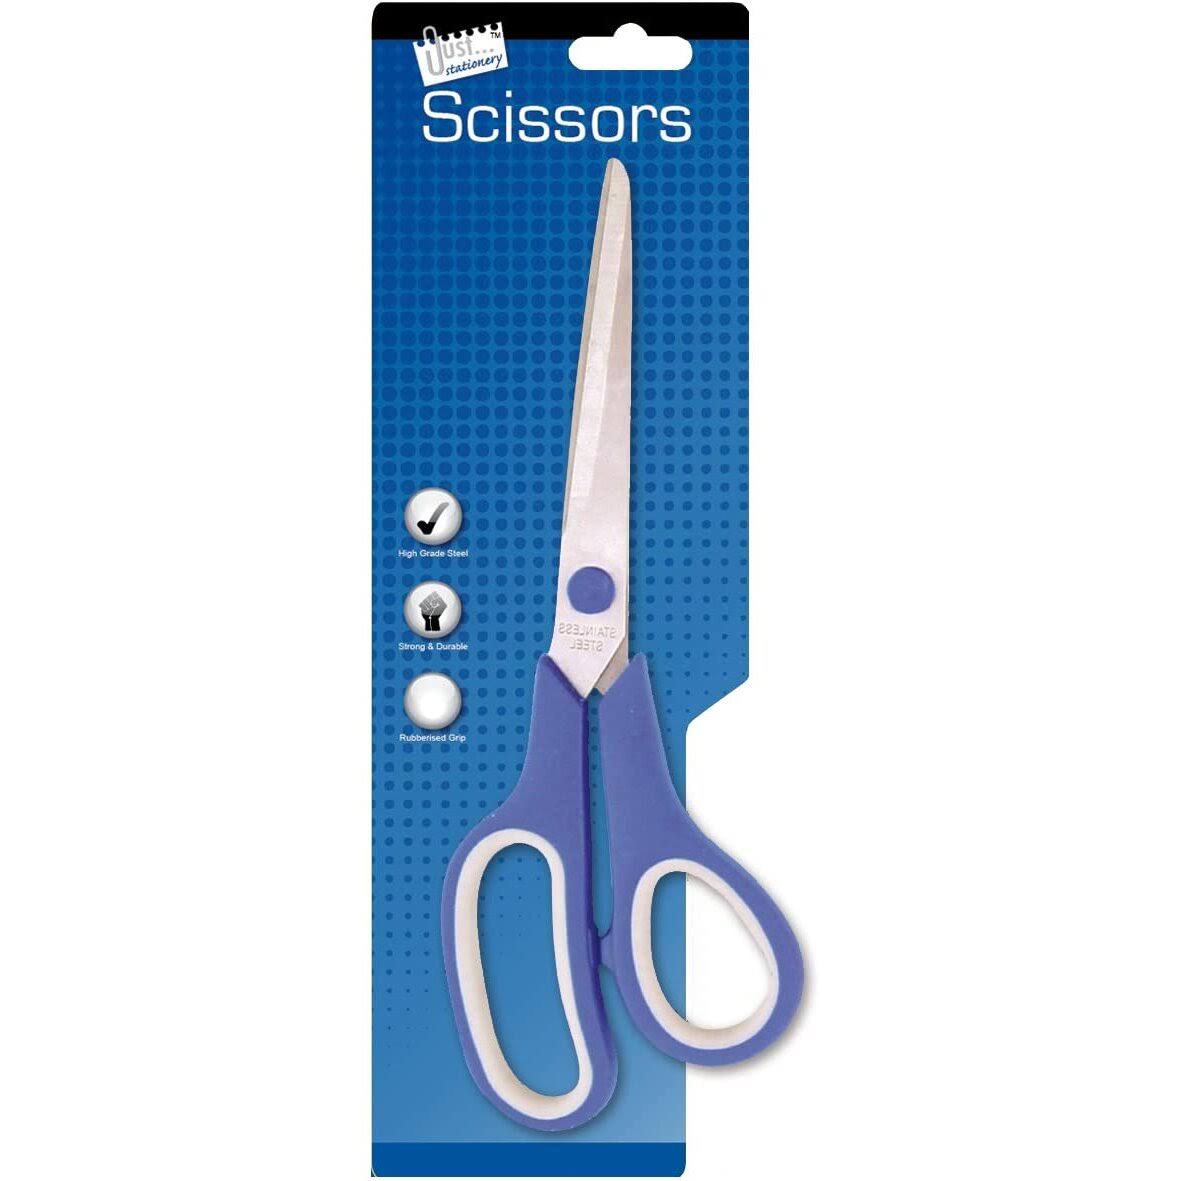 Just Stationery 10 Inch Multi Purpose Scissors